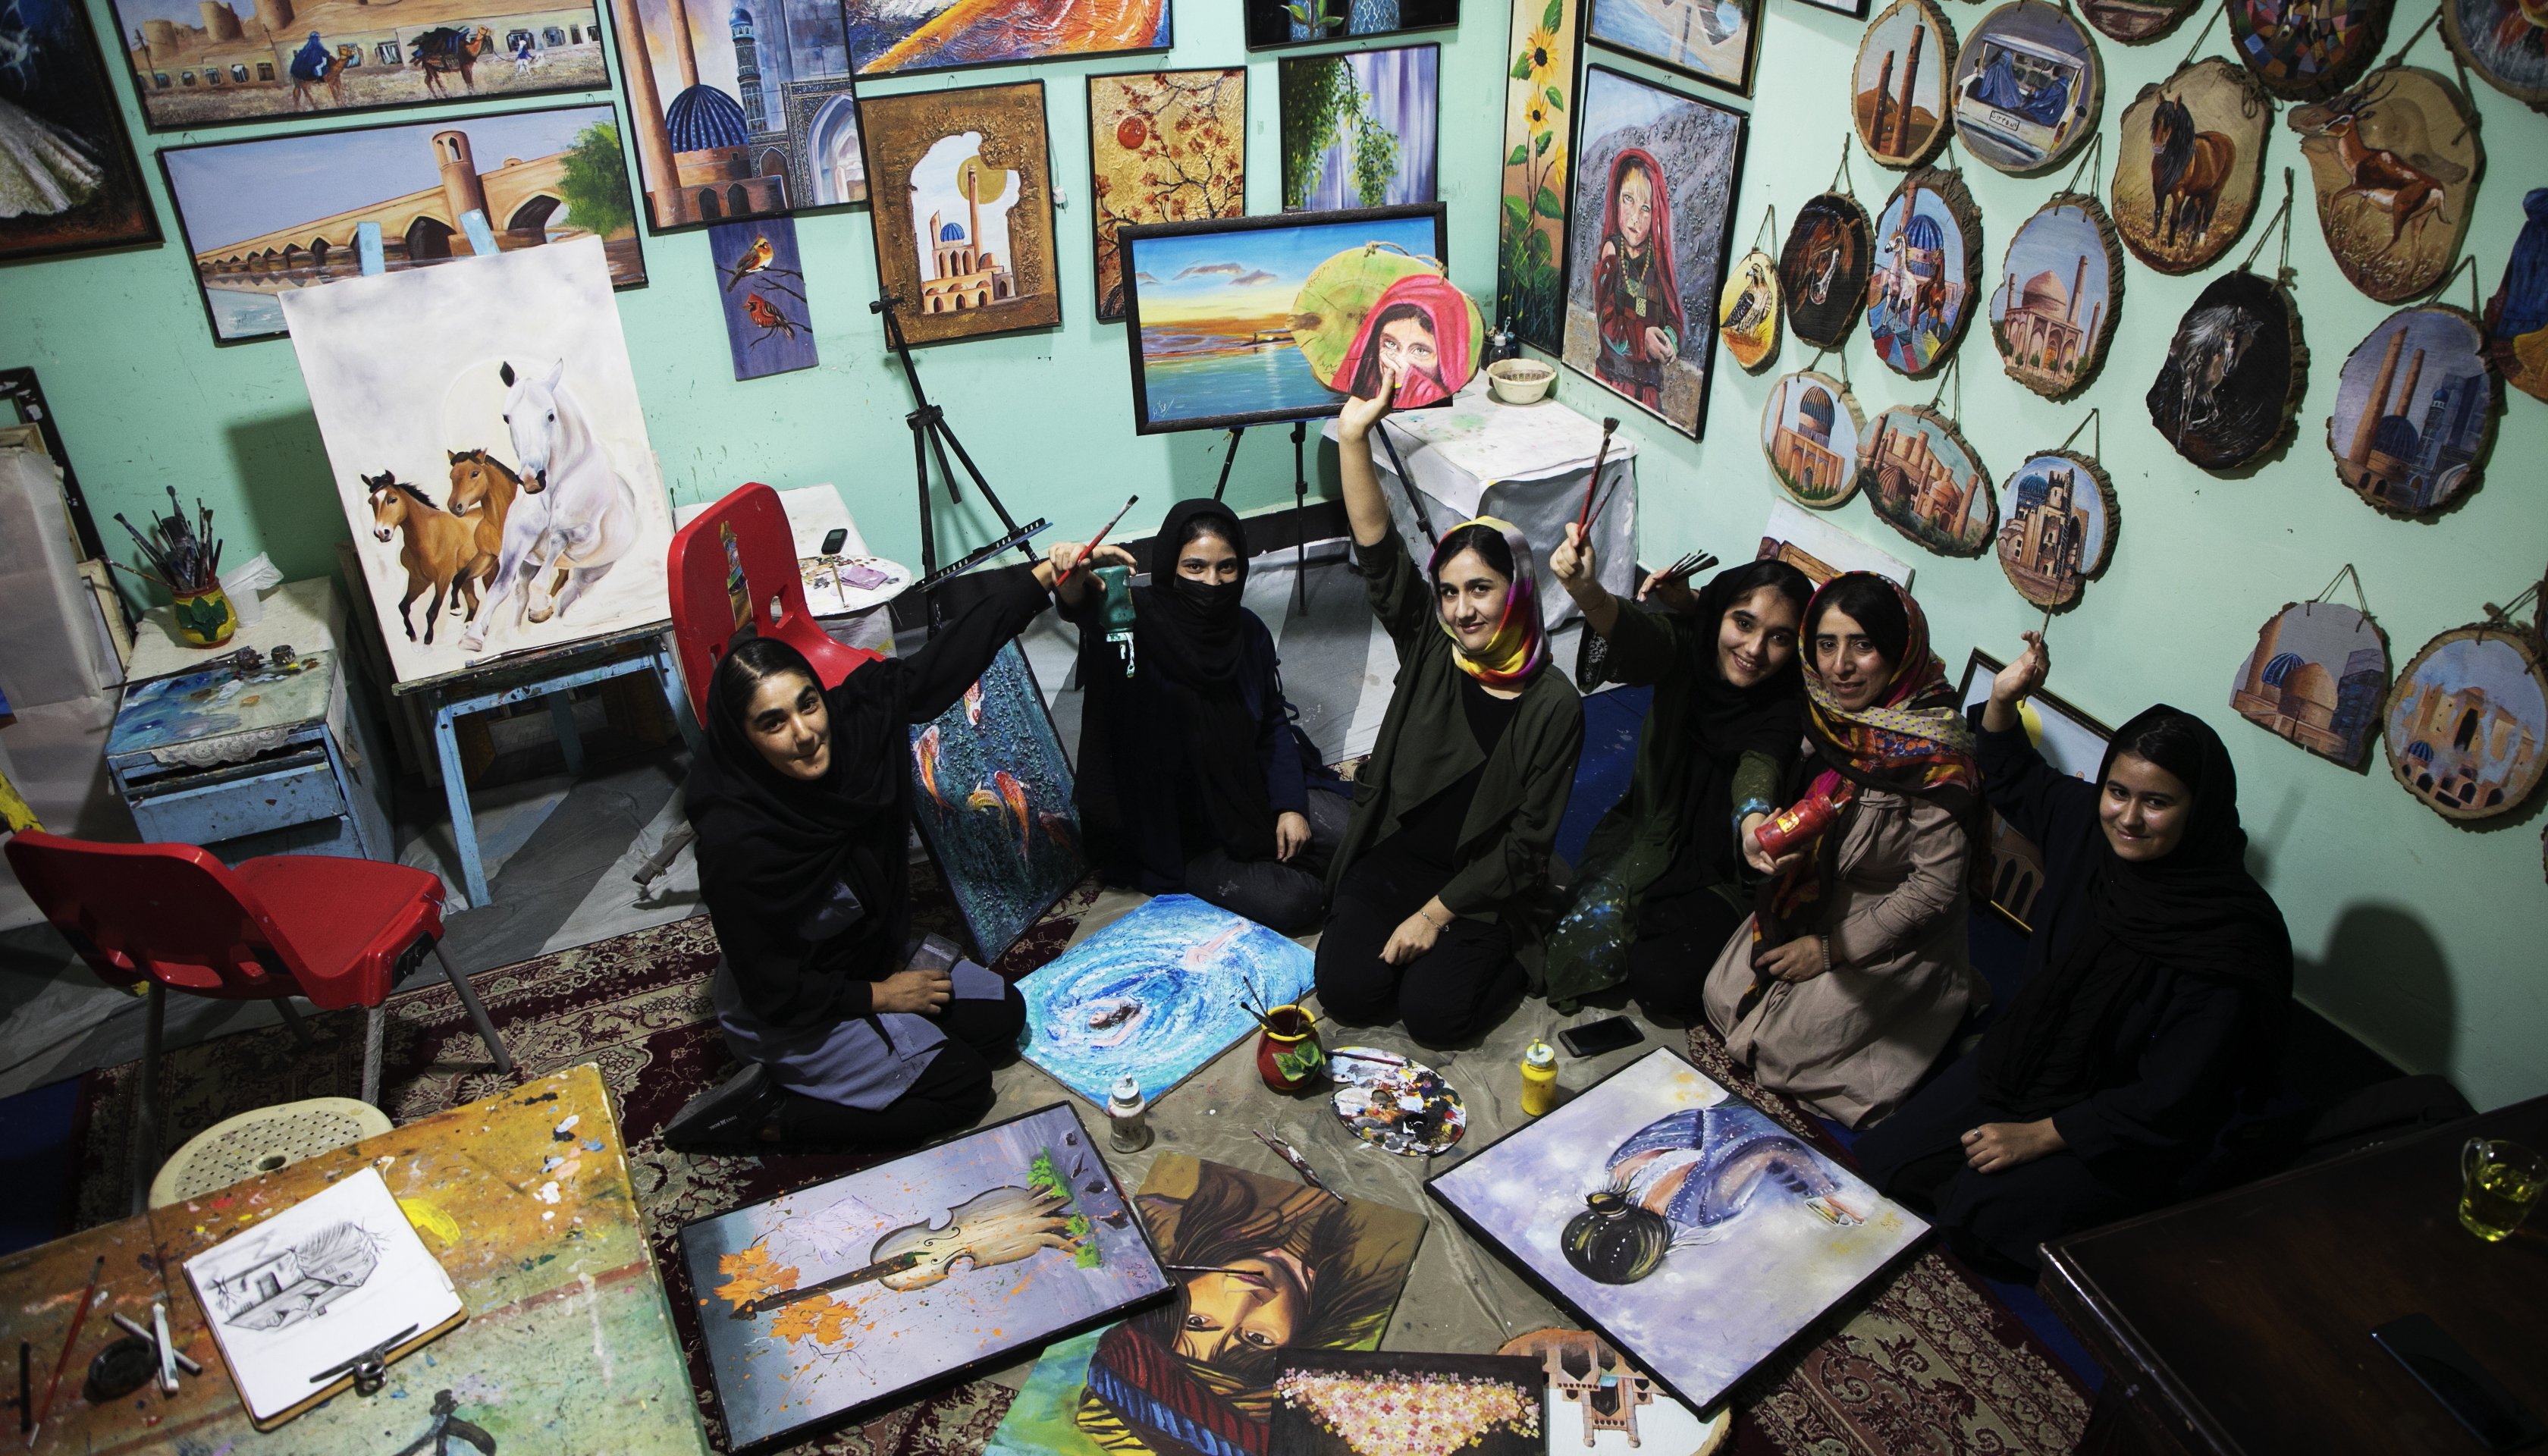 Read Meet the women entrepreneurs of Herat by UNDP Afghanistan